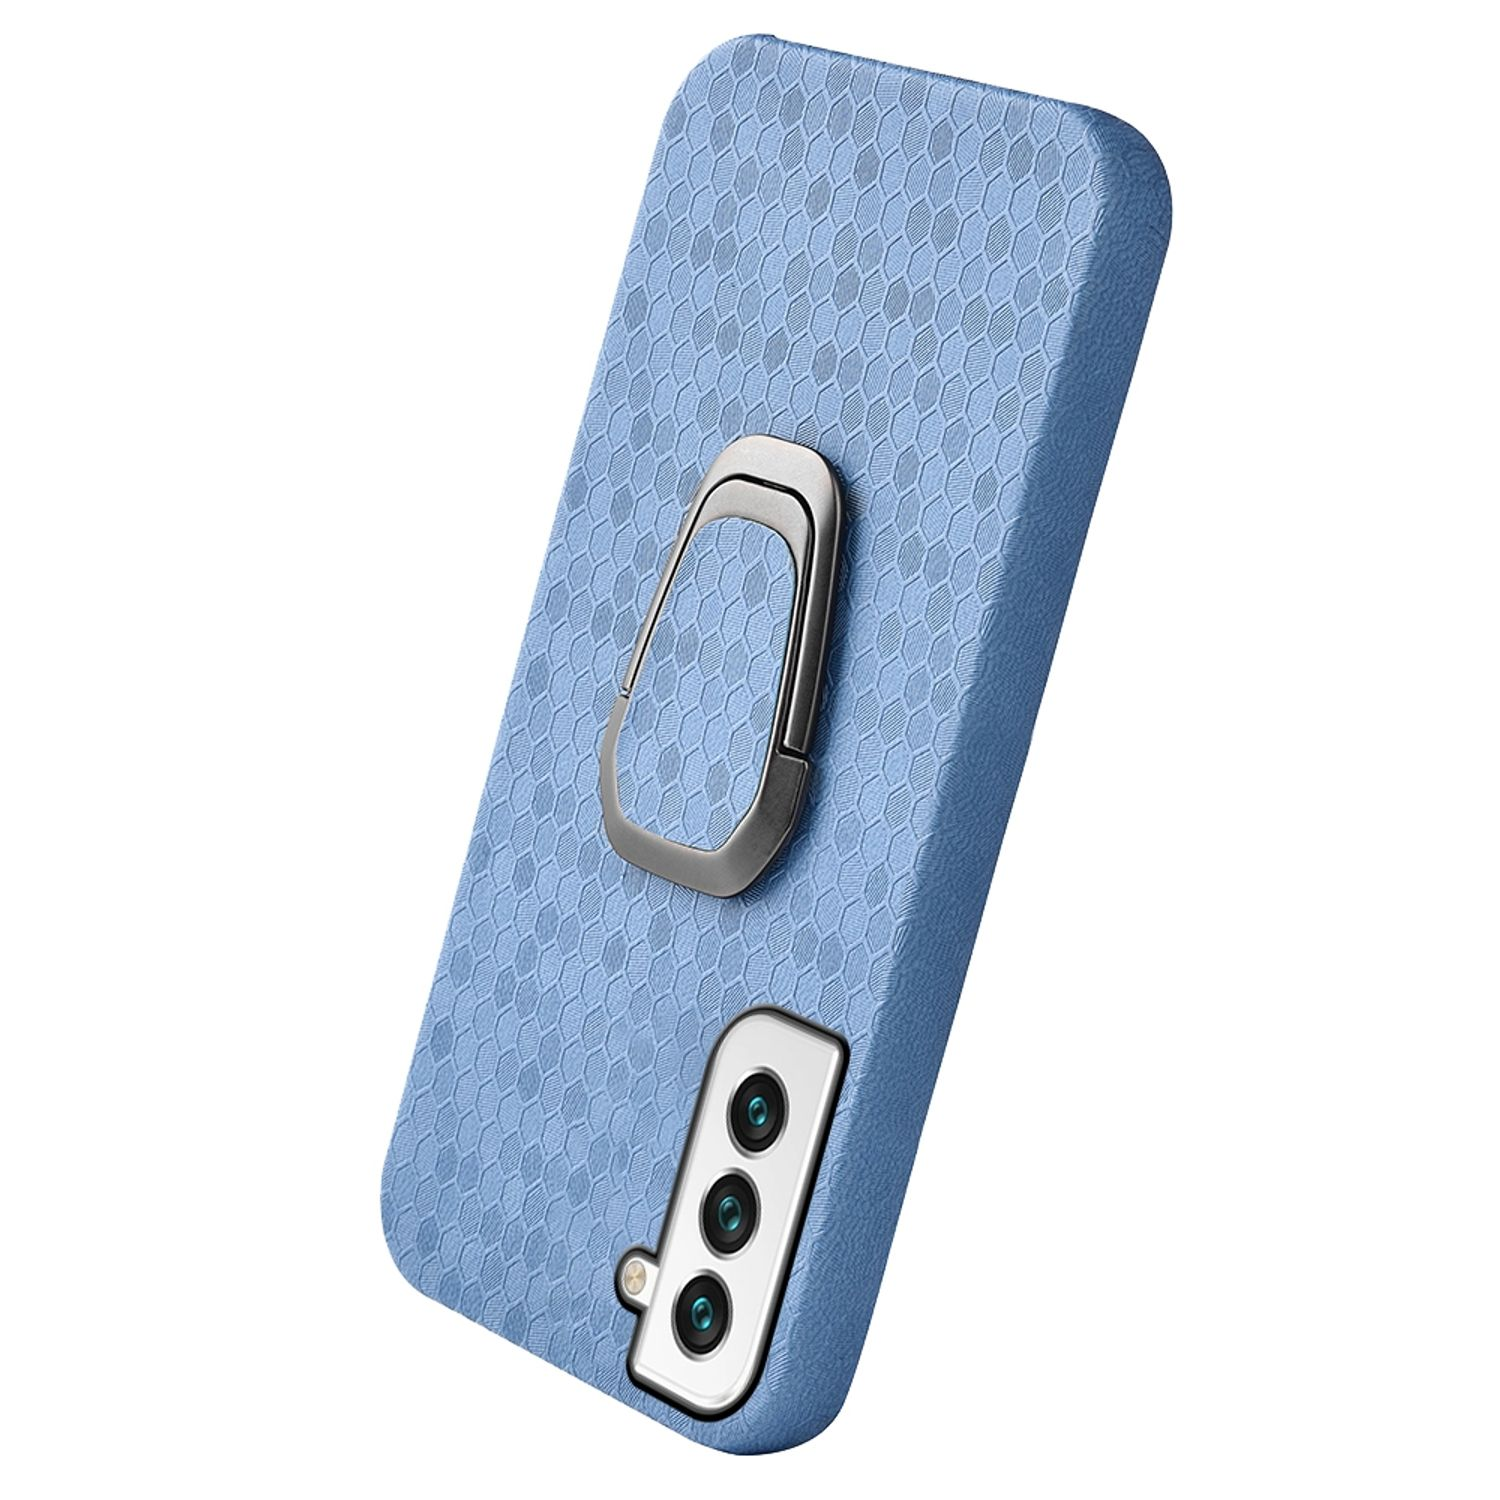 KÖNIG DESIGN Case, Backcover, Blau Baby S22 Galaxy 5G, Samsung